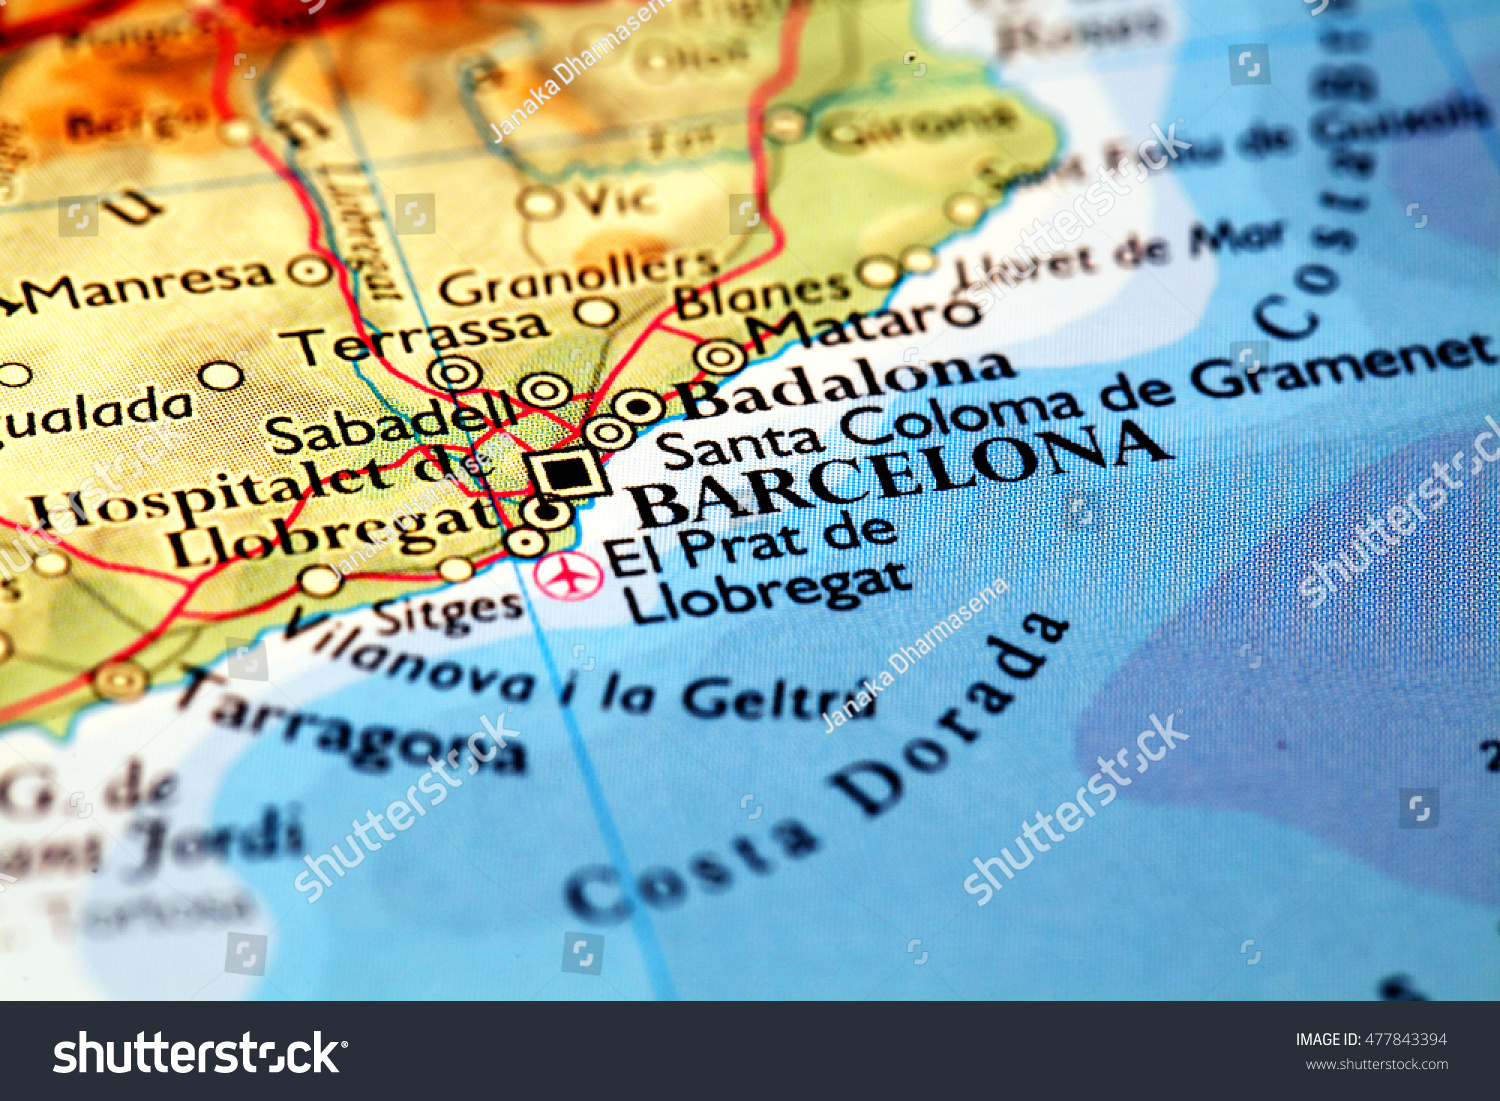 Barcelona Spain On Atlas World Map Stock Photo Edit Now 477843394